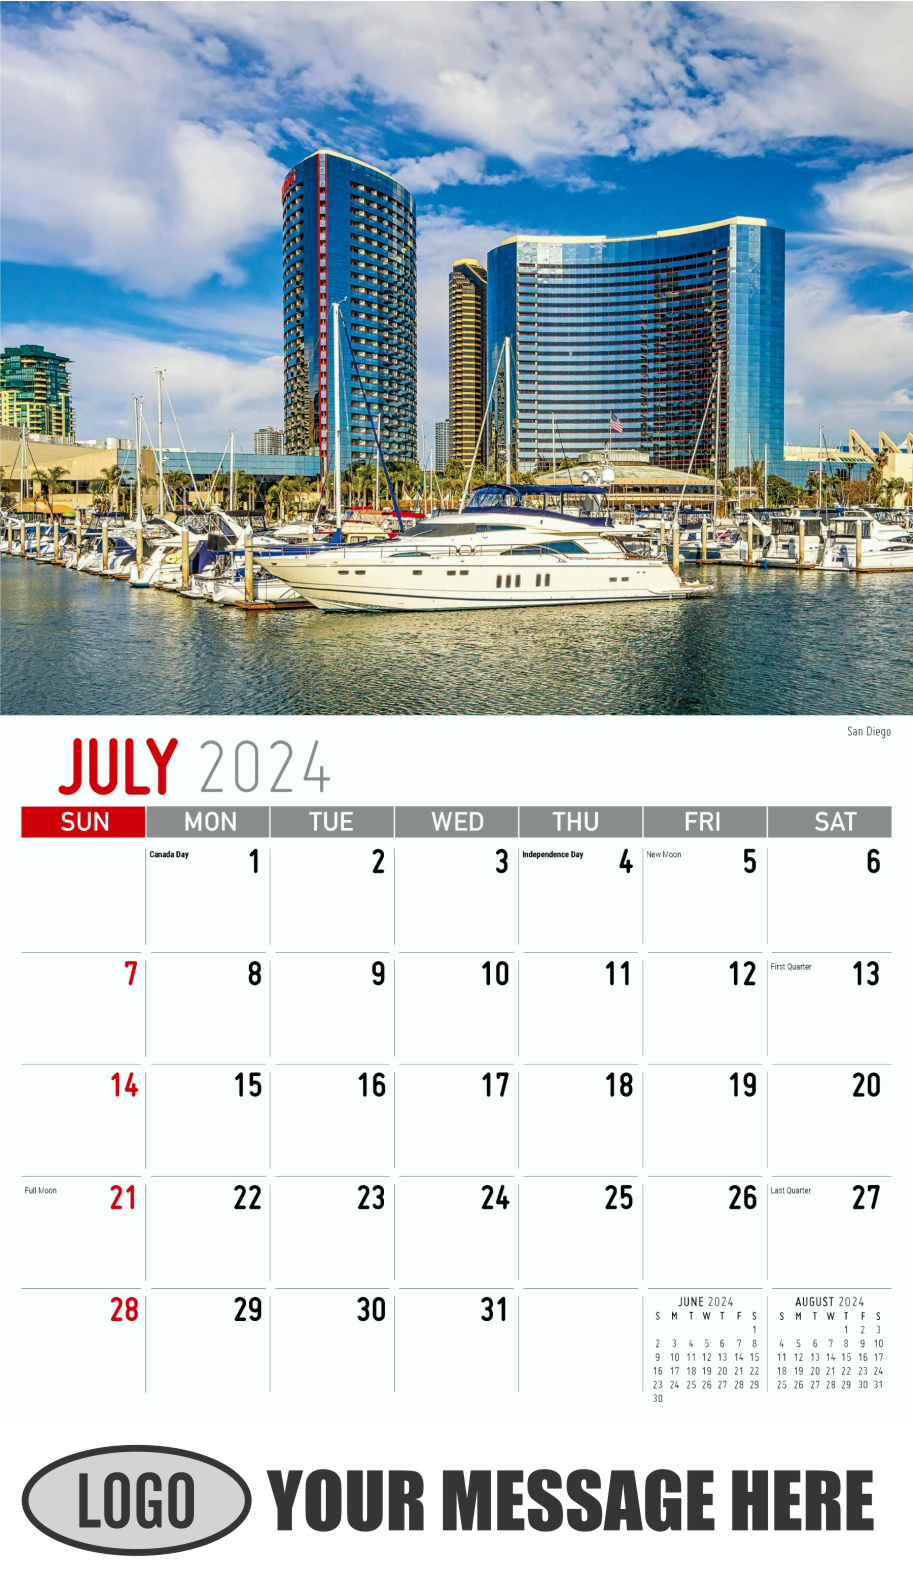 Scenes of California 2024 Business Advertising Wall Calendar - July